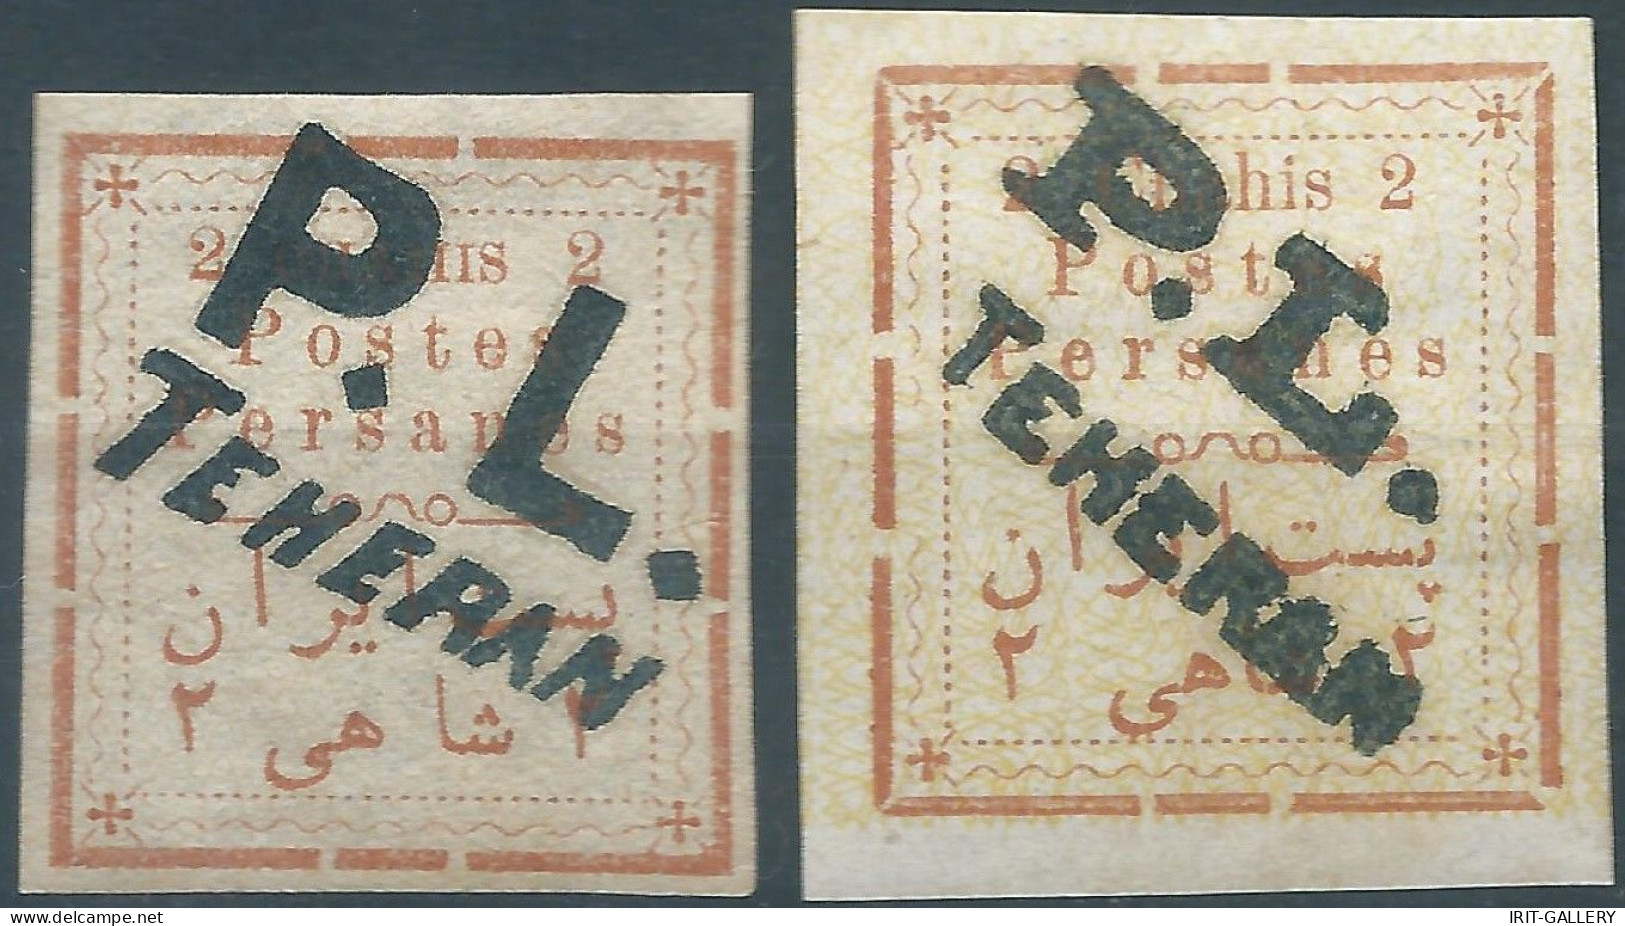 PERSIA PERSE IRAN,1902 The Local Post Issue For Tehran Black Handstamp,Overprint P.L.TEHERAN On 2 Chahis,TypeI&II,Mint - Iran